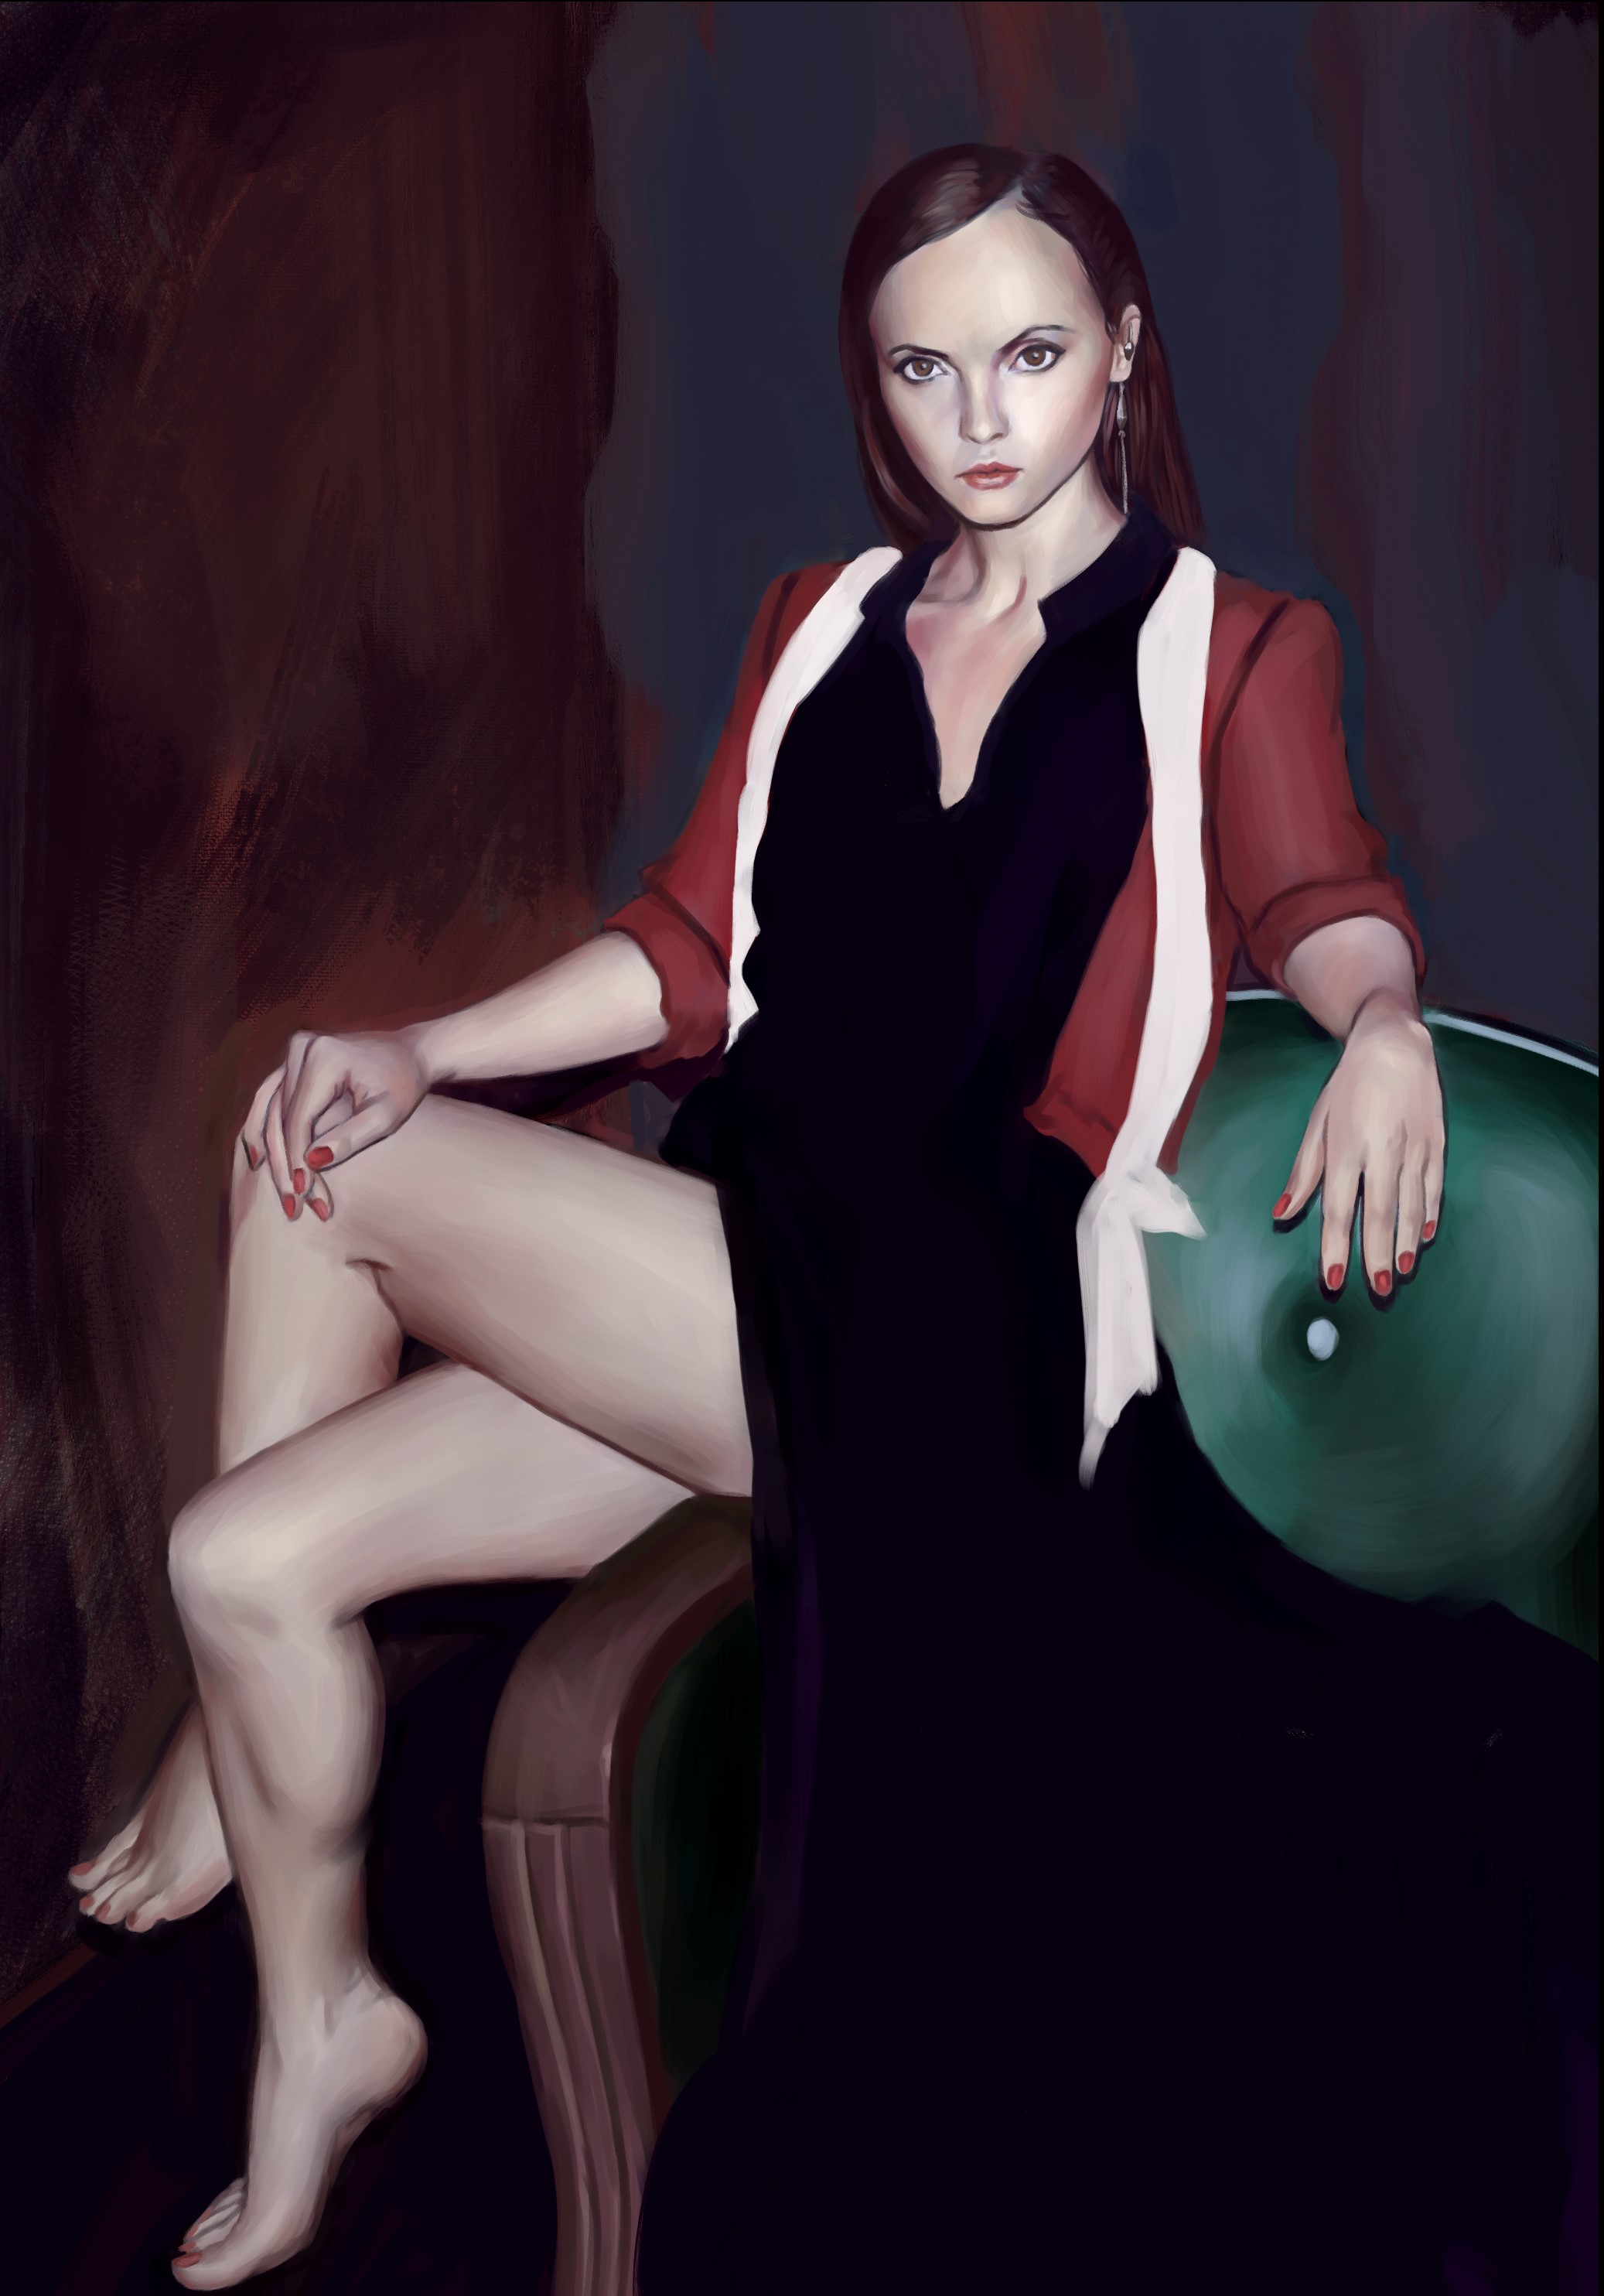 Christina Ricci Artwork Women Actress Sitting Legs Barefoot Red Nails Painted Nails Looking At Viewe 2074x2968